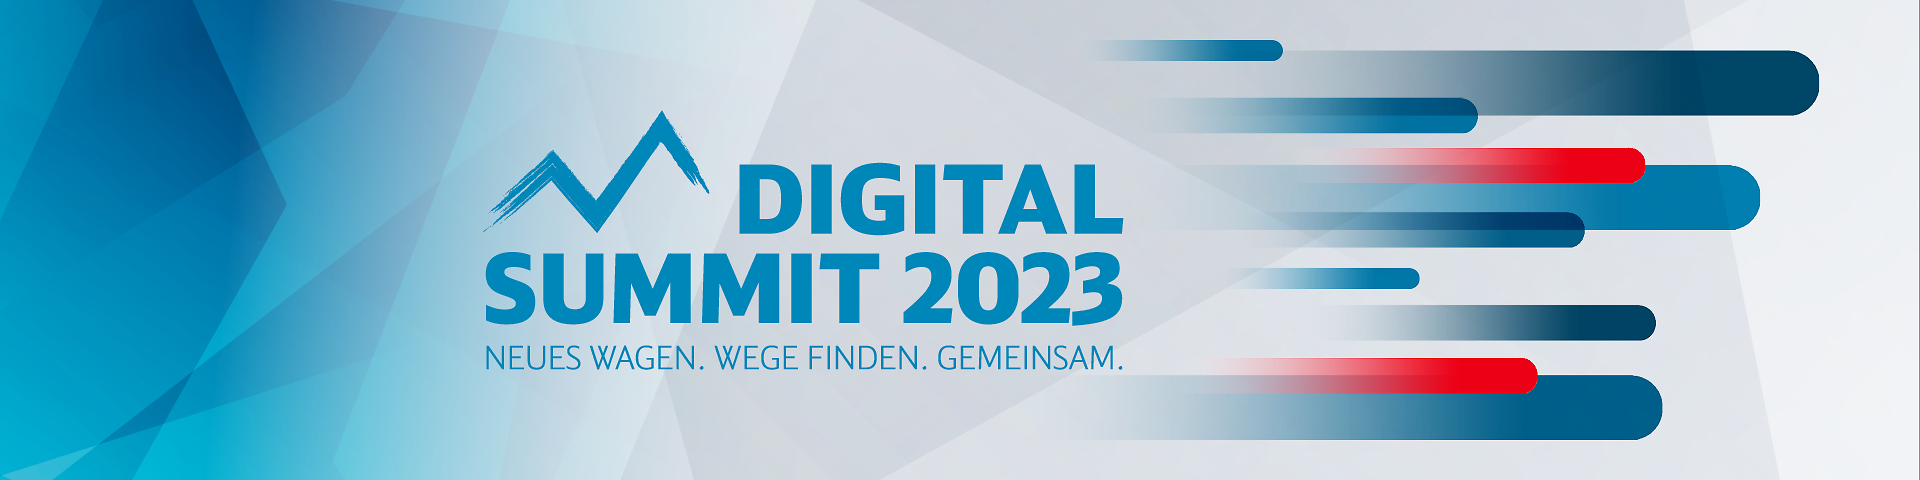 Header Digital Summit